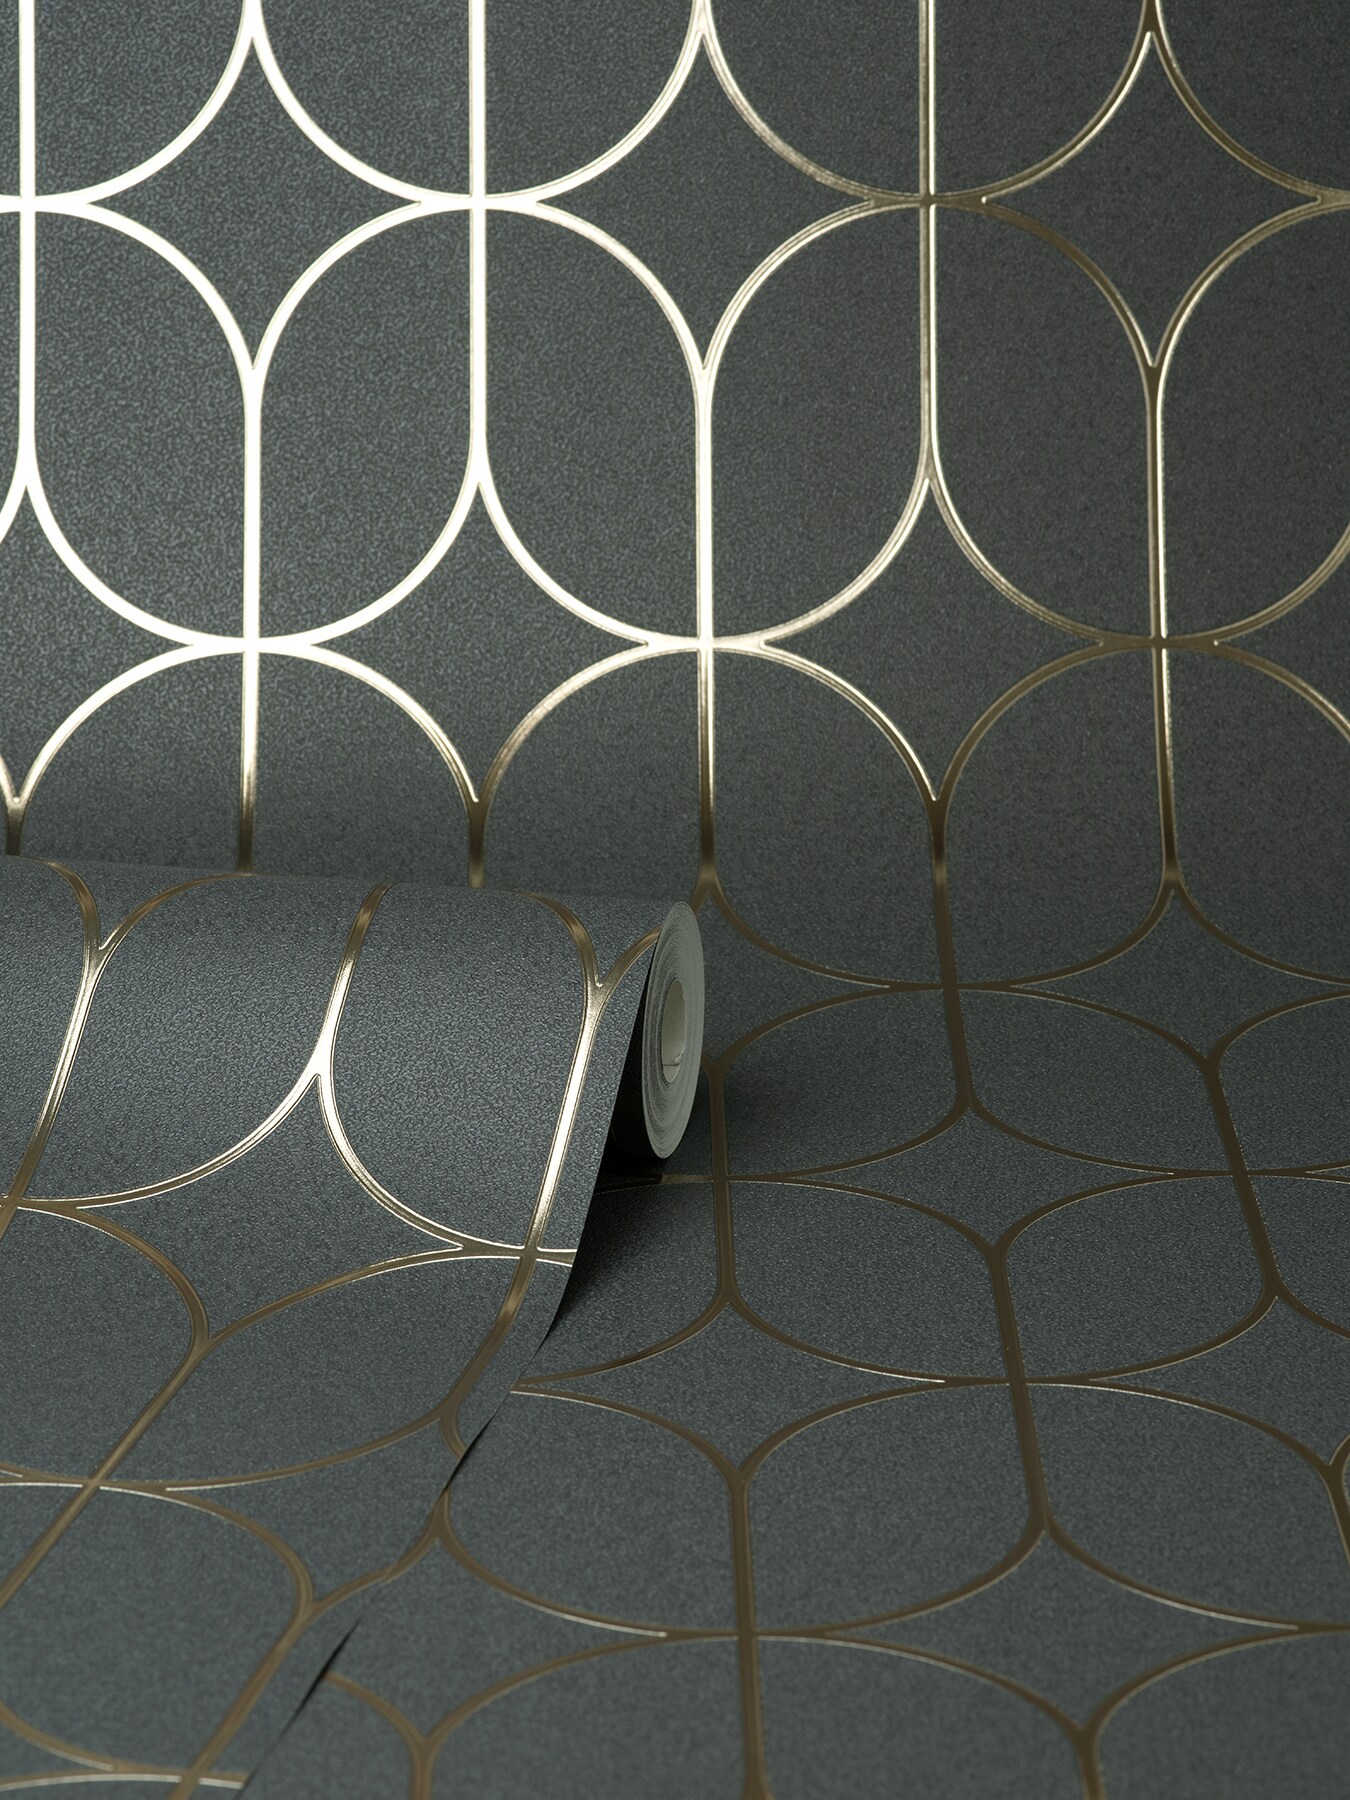 Rose Gold Geometric Wallpaper Revitalizing a Chic Bedroom